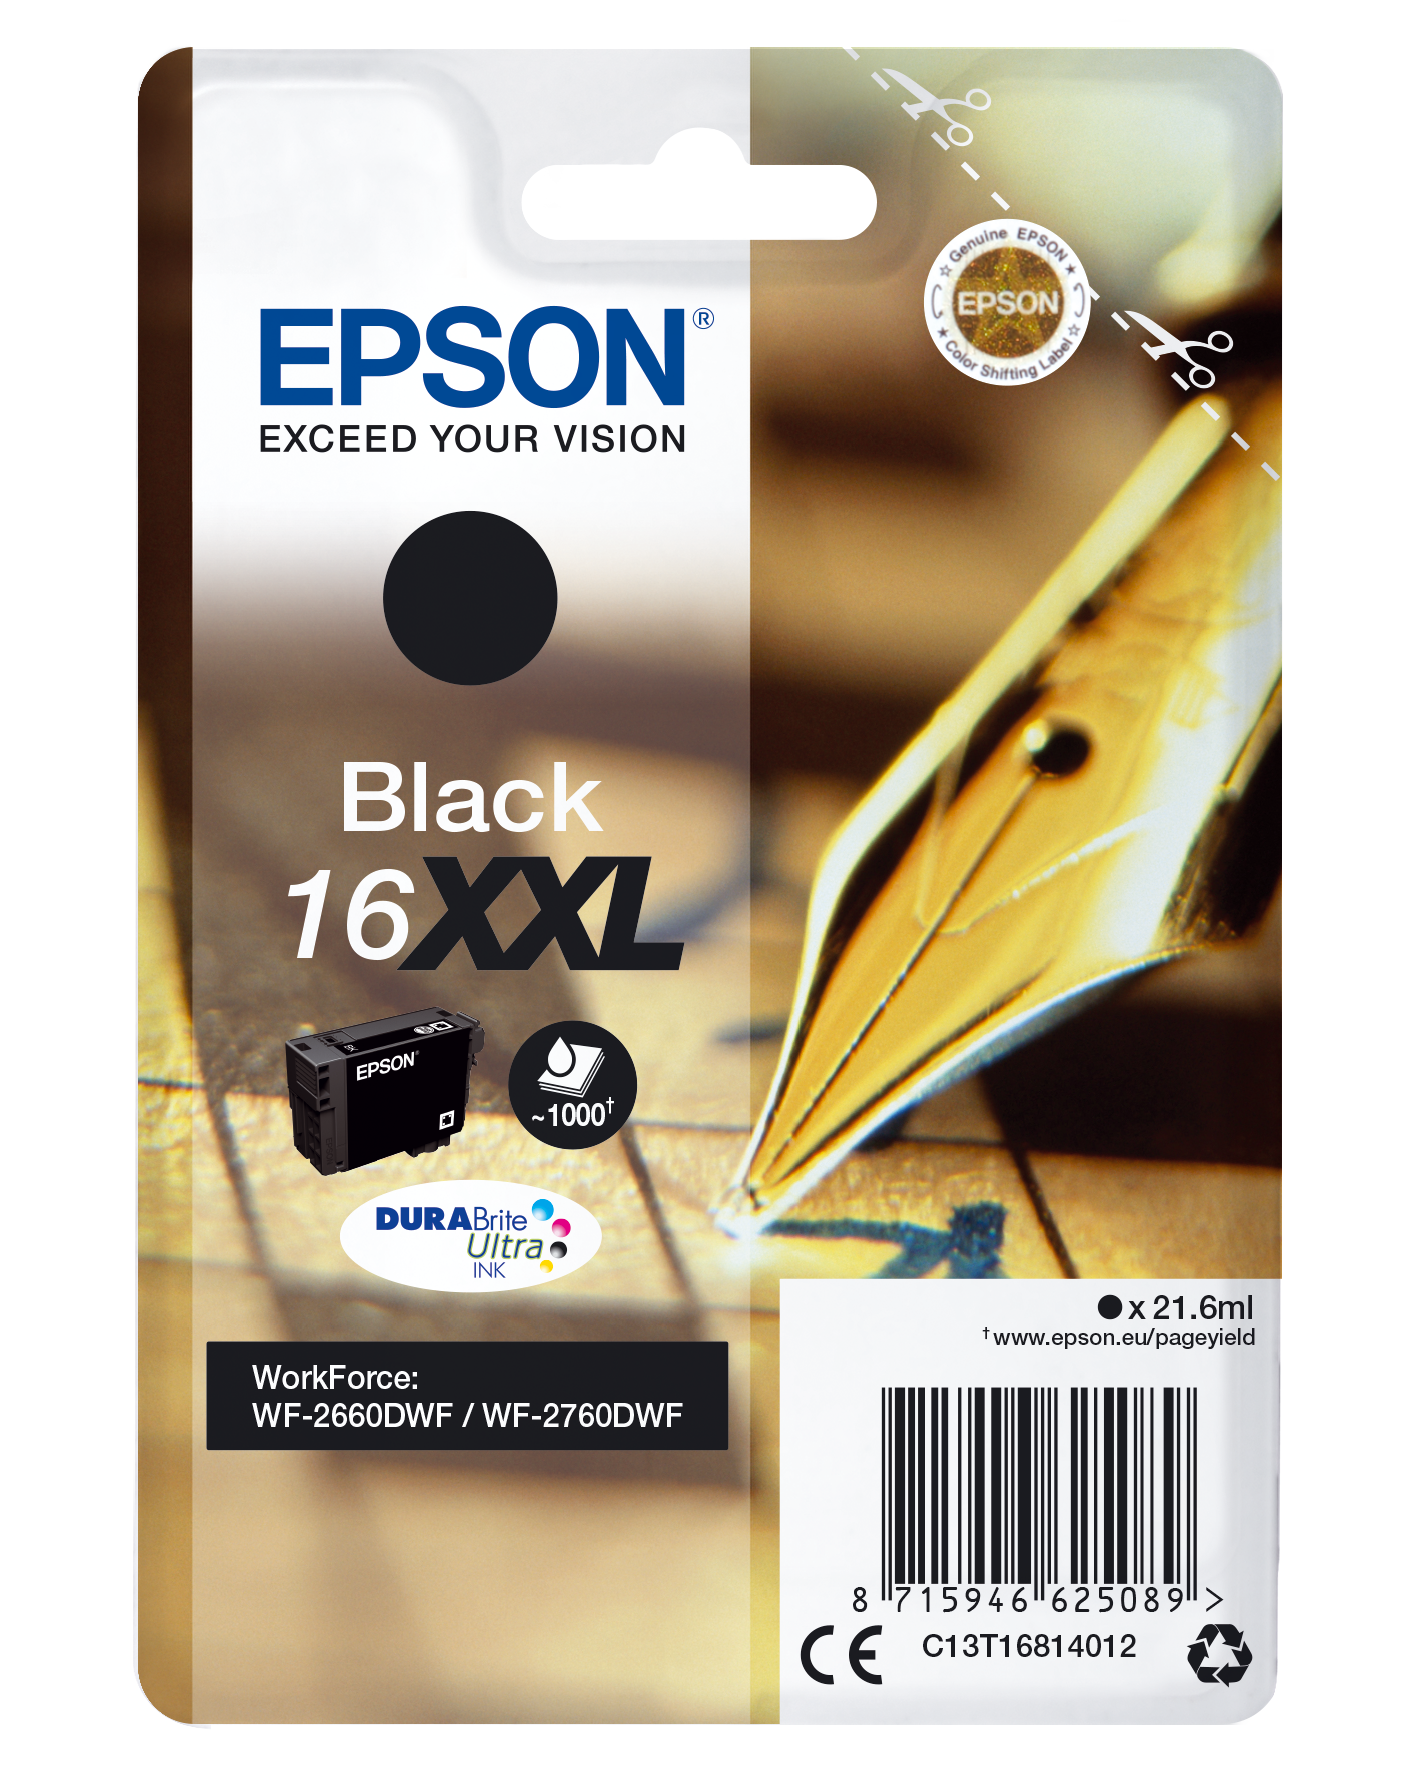 Epson Singlepack Black 16XXL DURABrite Ultra Ink single pack / zwart